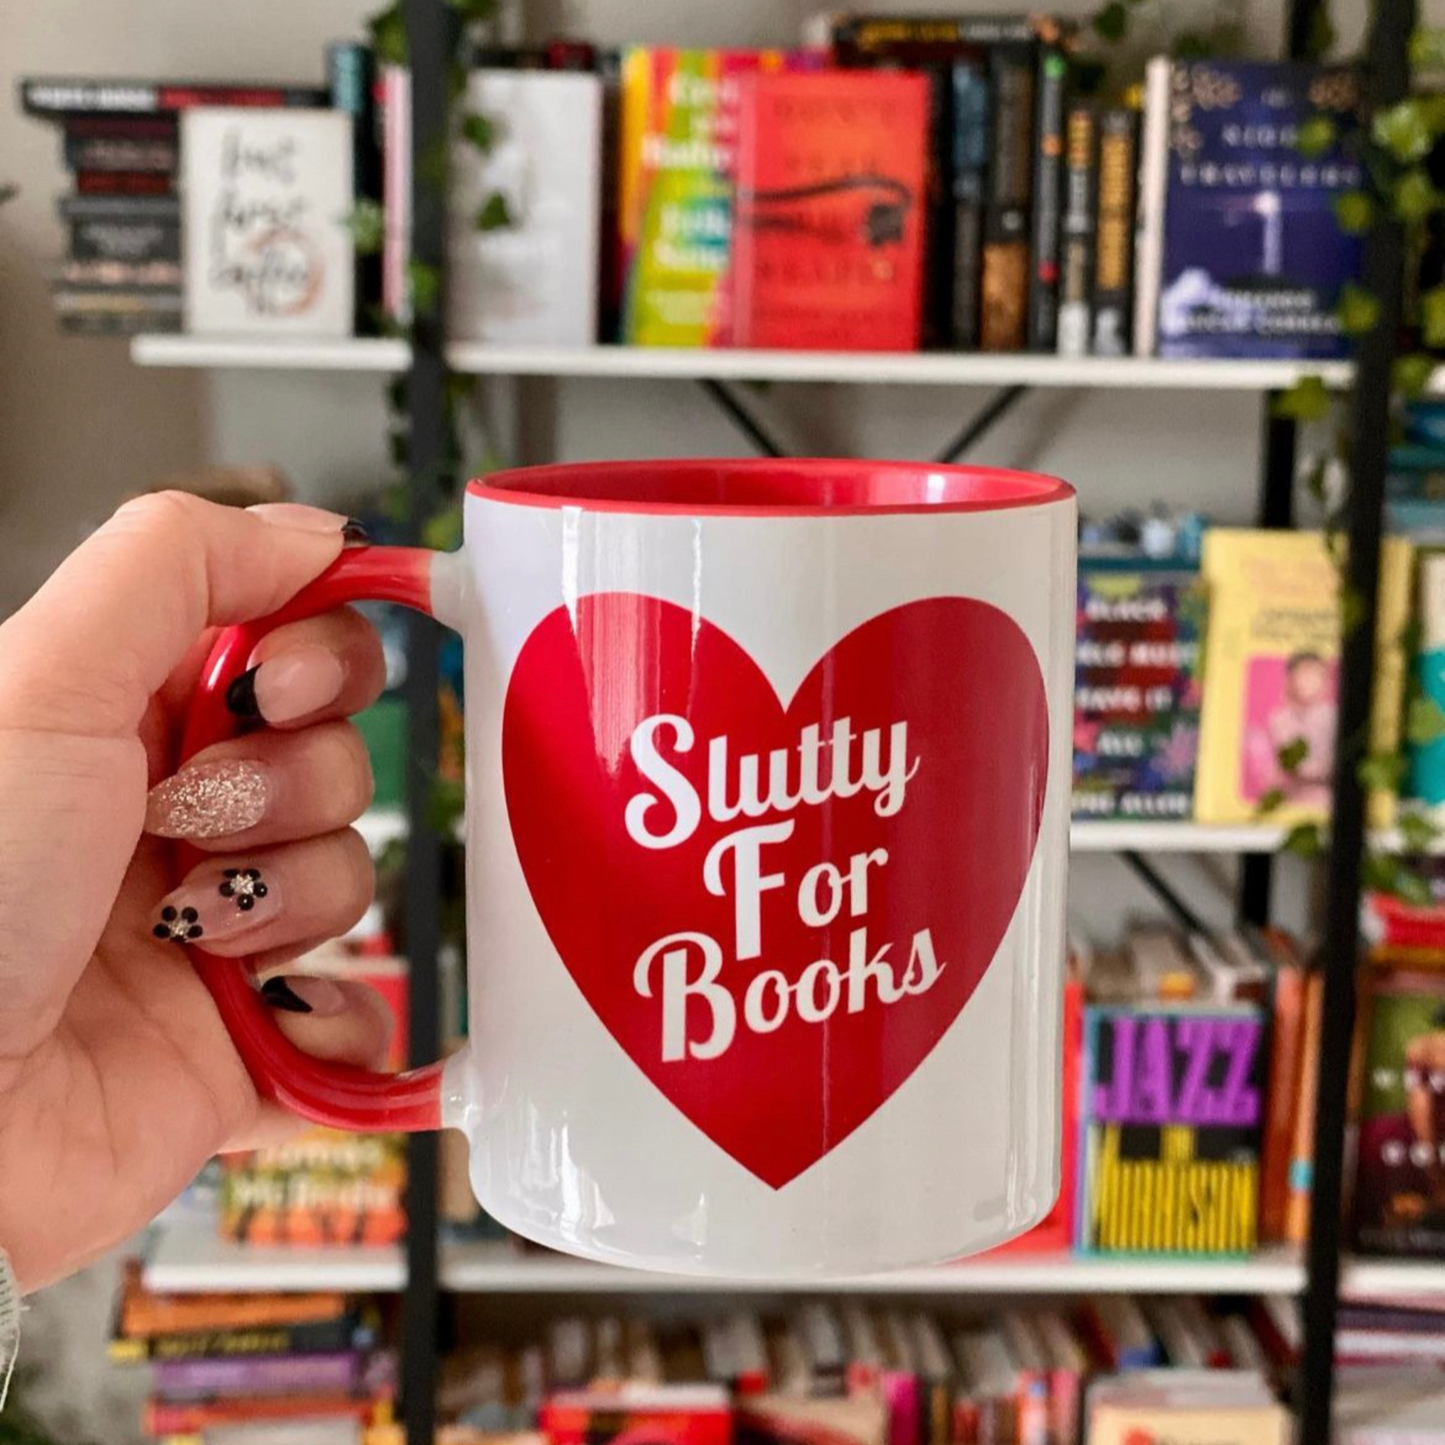 Slutty for book romance book lover mug